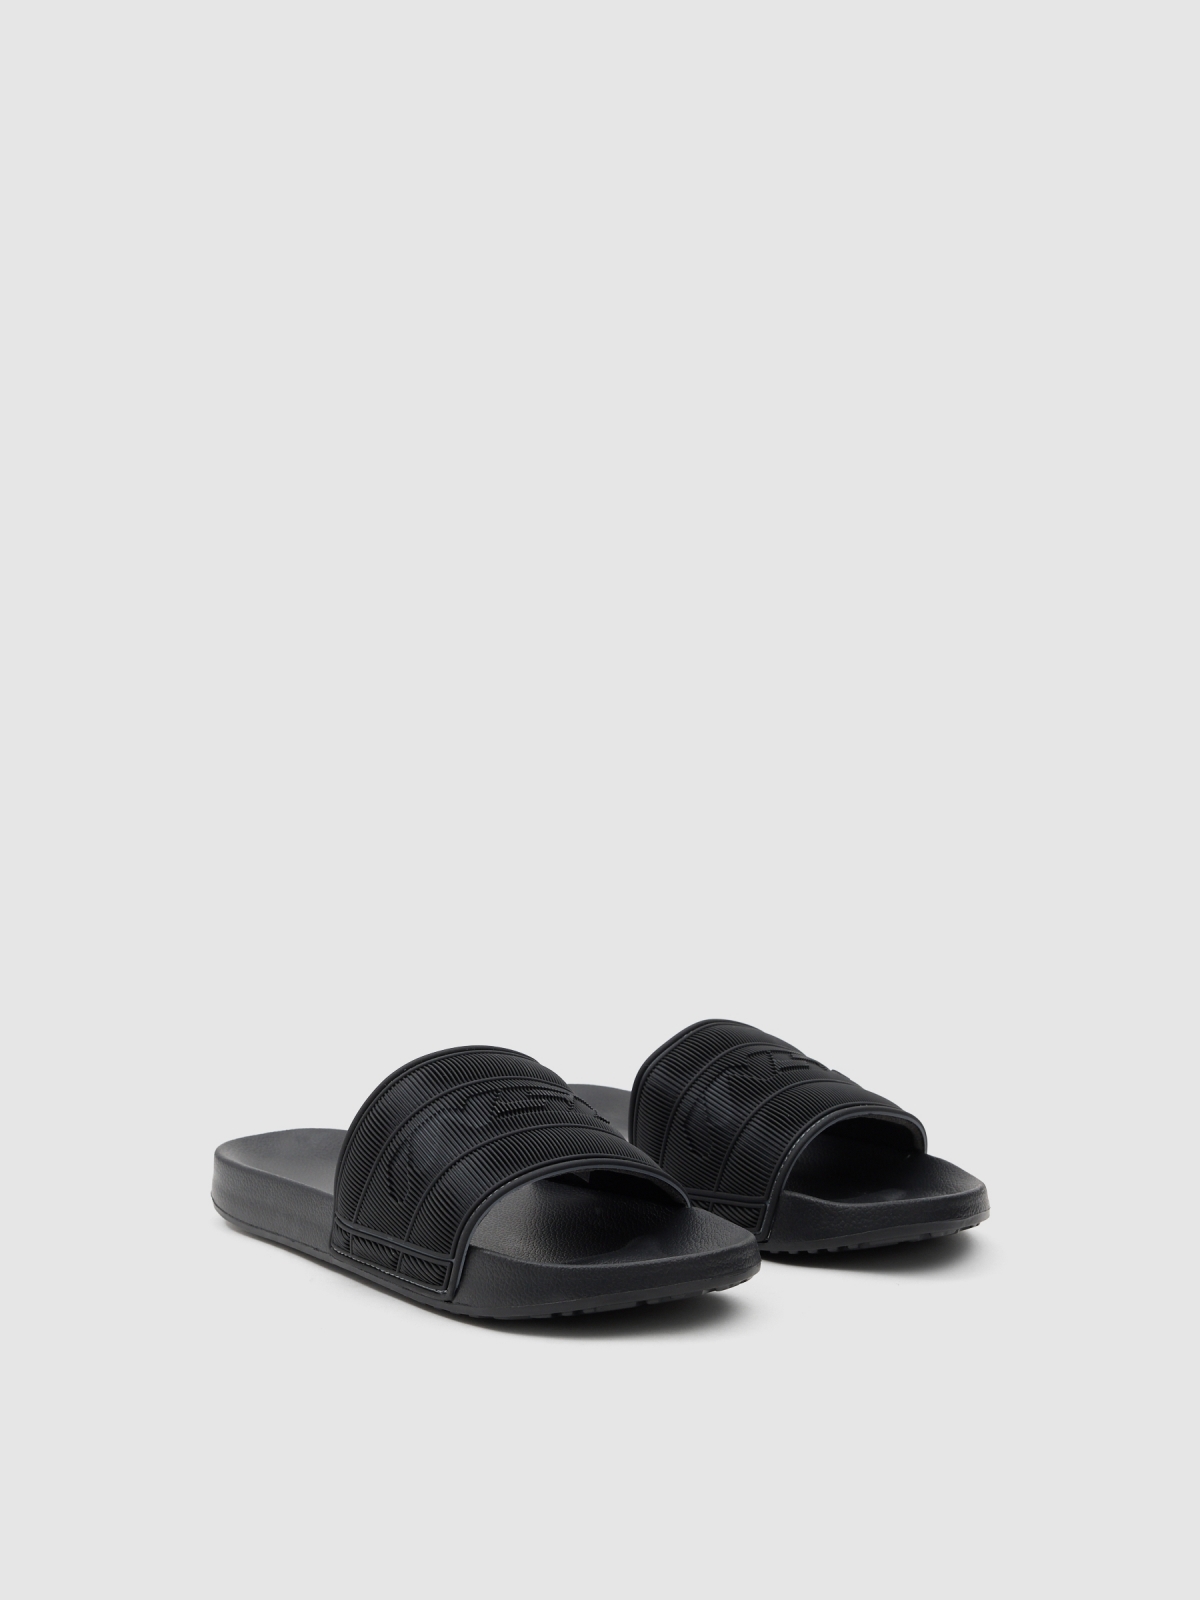 Comfort flip flops black lateral view